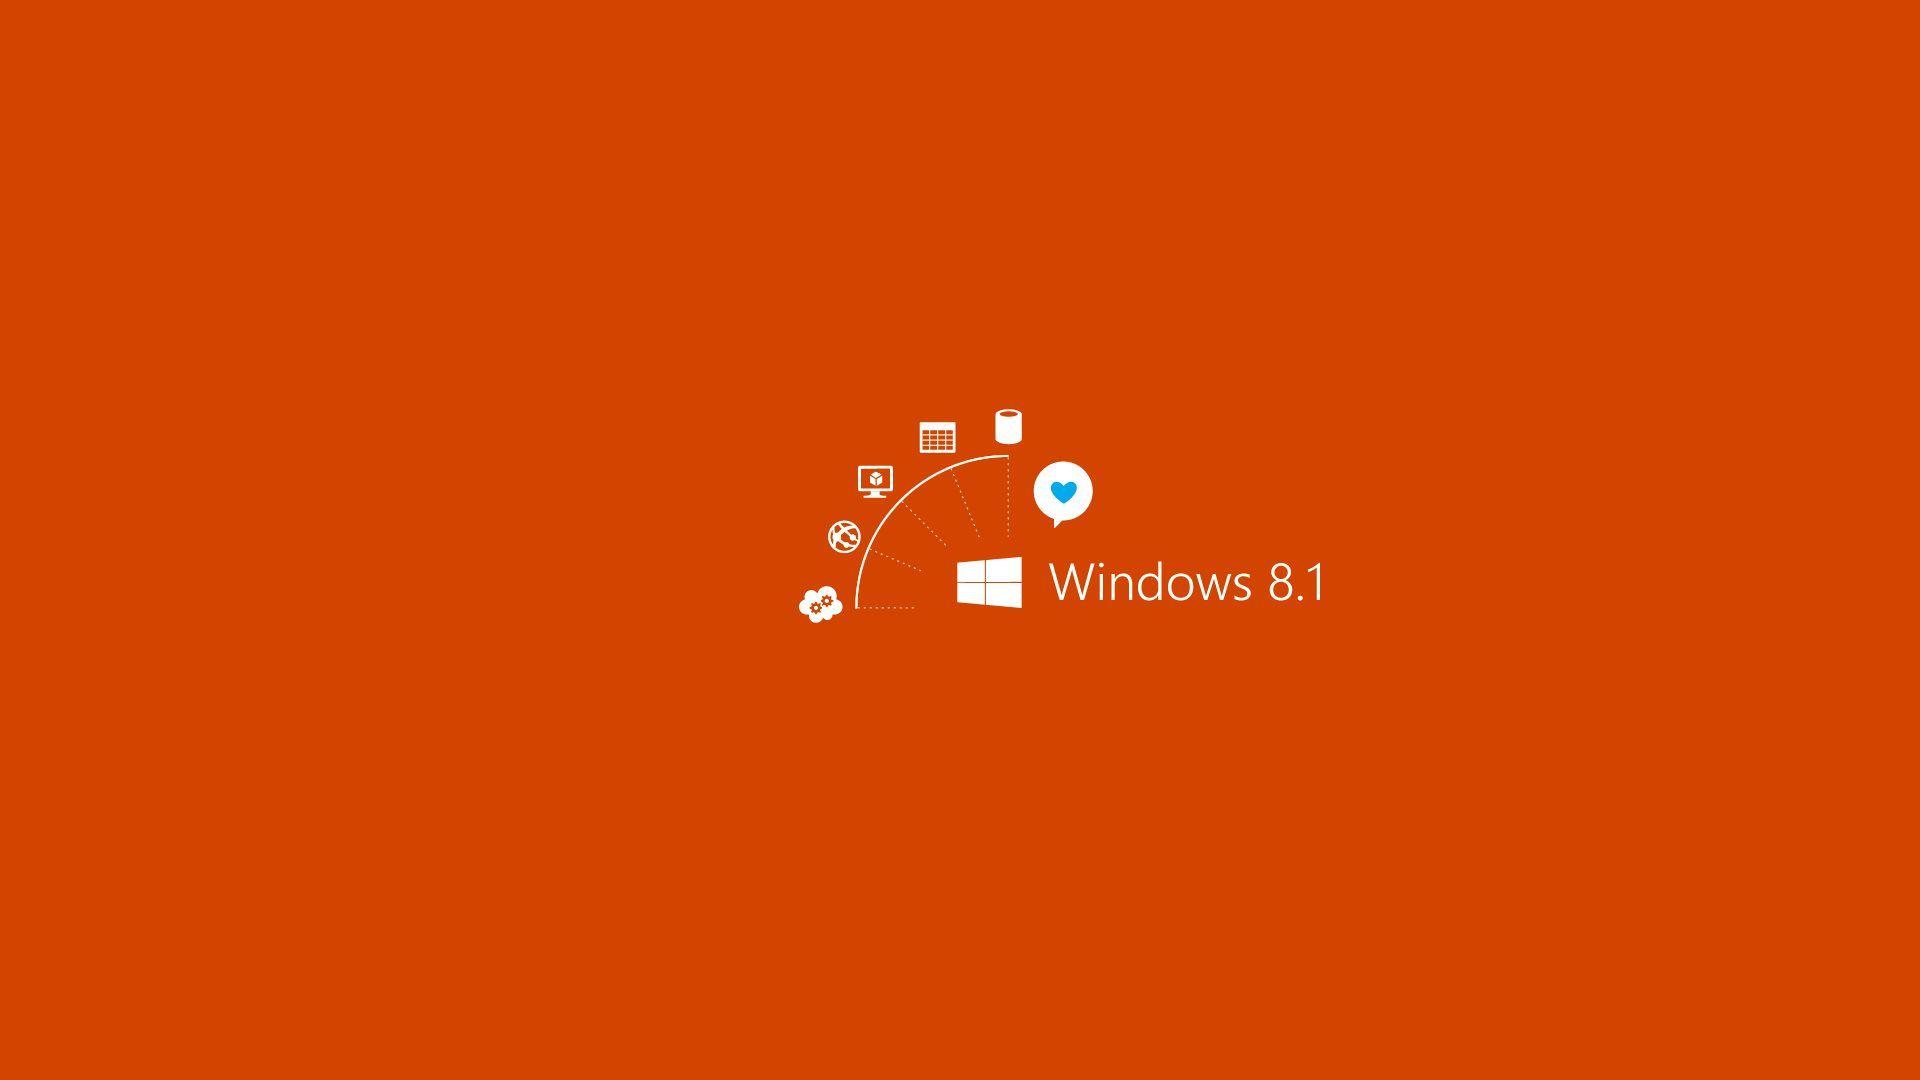 Оранжевый 1 1 20 август 2021. Обои Windows 8. Обои виндовс 8.1. Windows 8 рабочий стол. Заставка на рабочий стол Windows 8.1.